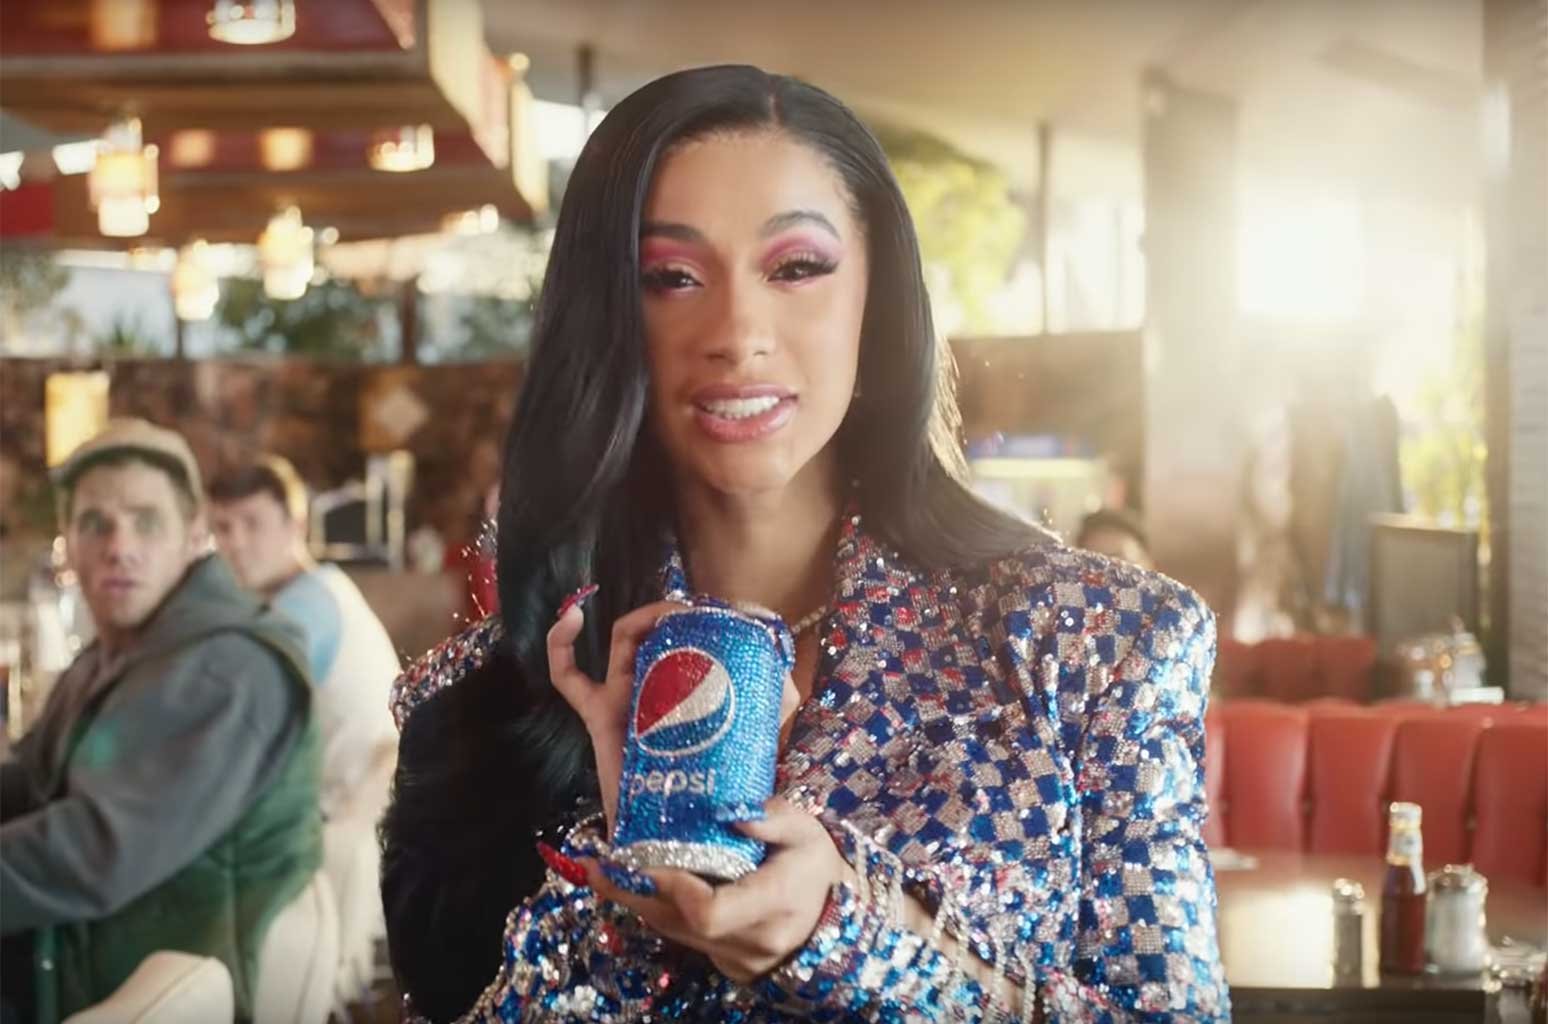 Cardi B in Pepsi's Super Bowl LIII commercial.